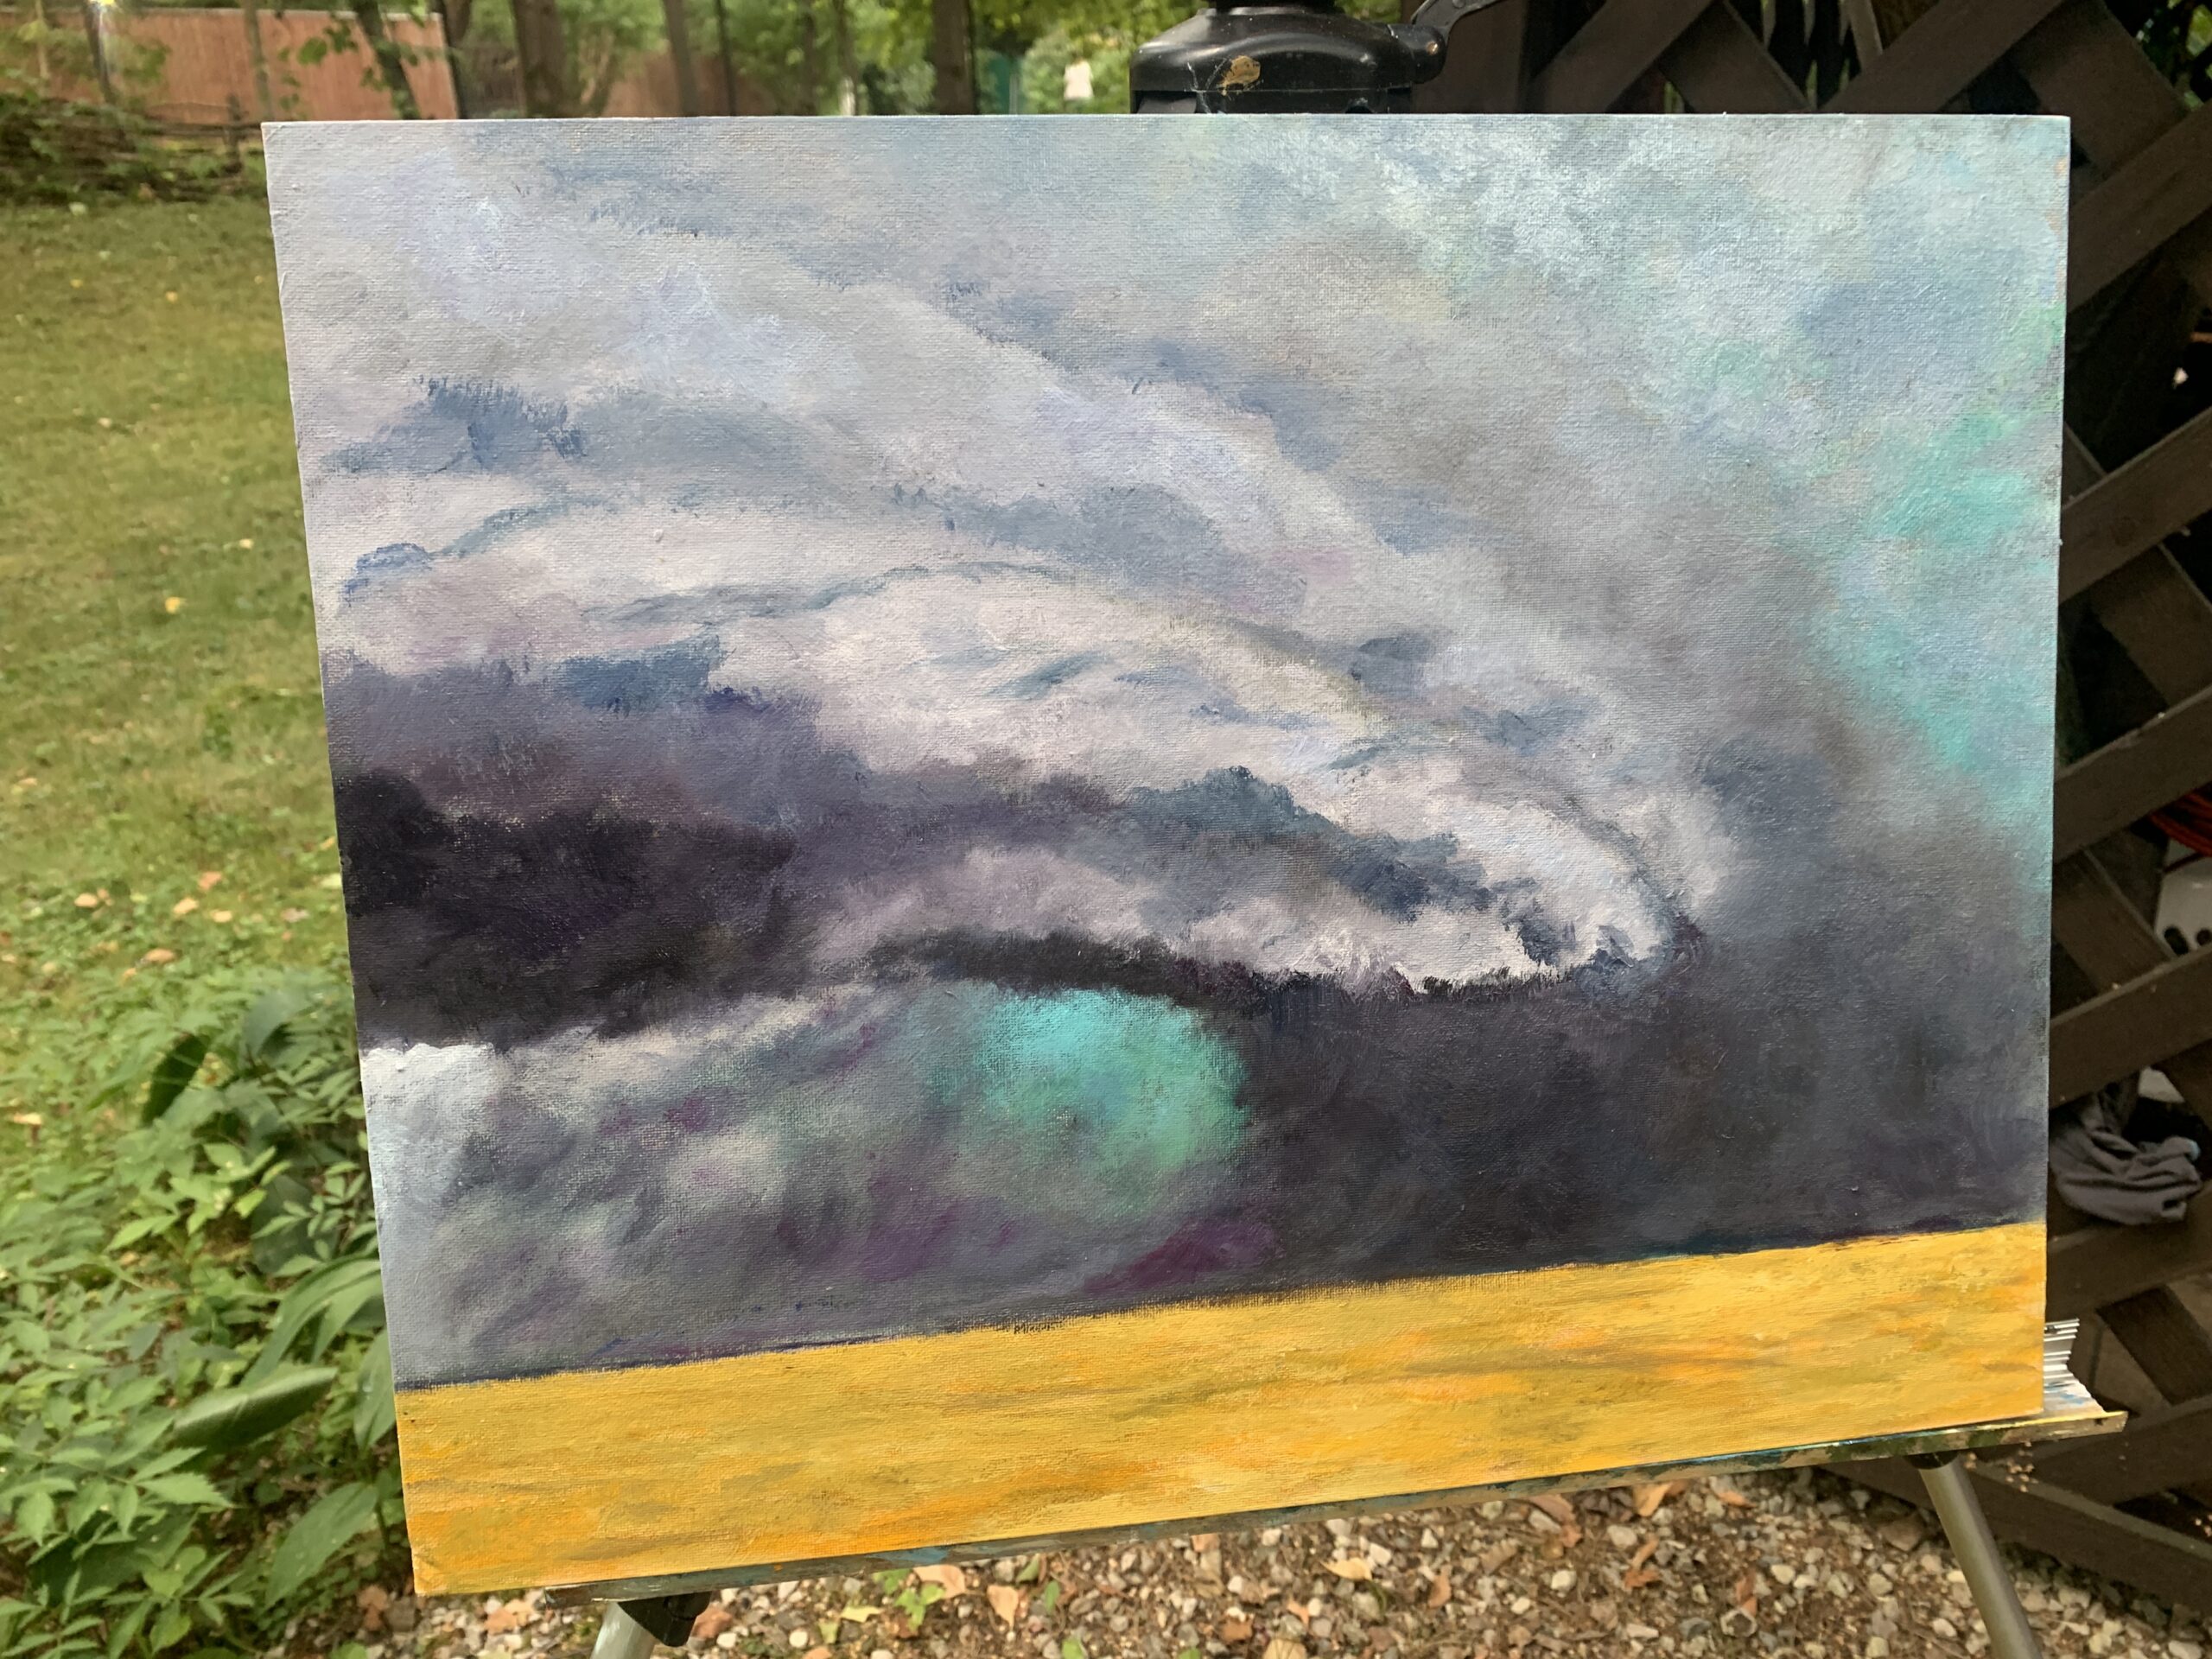 торнадо смерч канзас пейзаж картина художник Альберт Сафиуллин